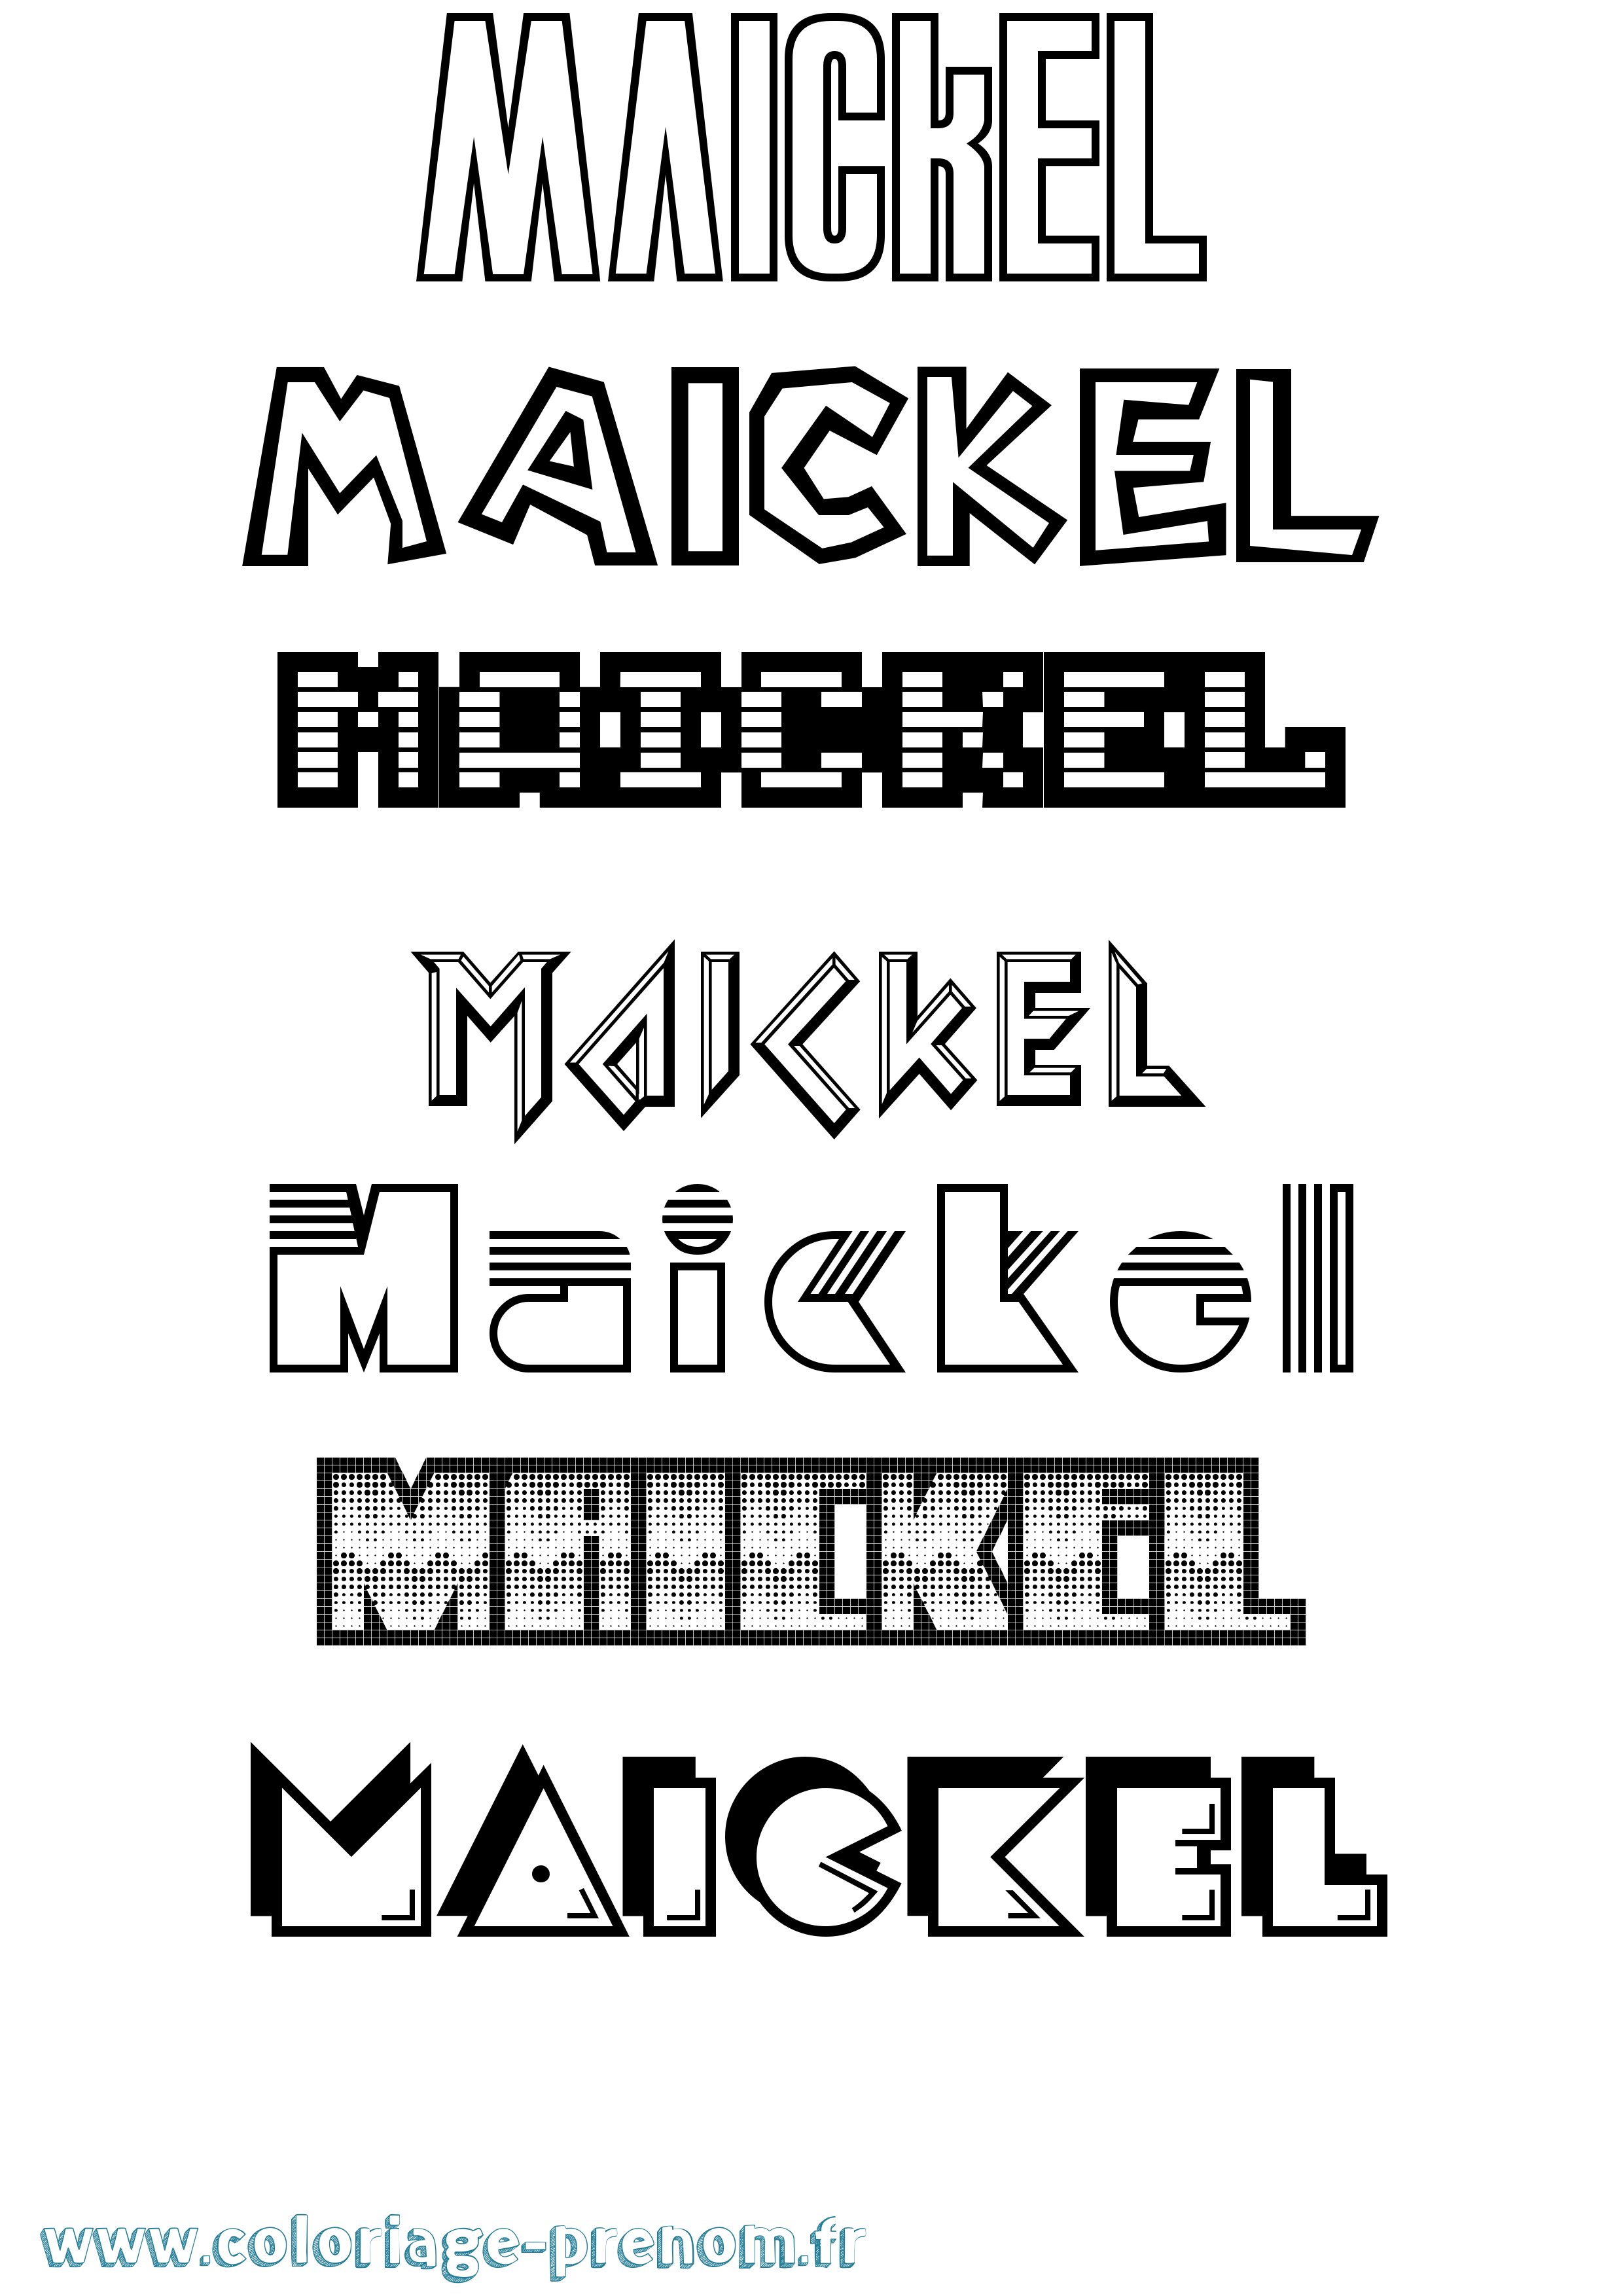 Coloriage prénom Maickel Jeux Vidéos